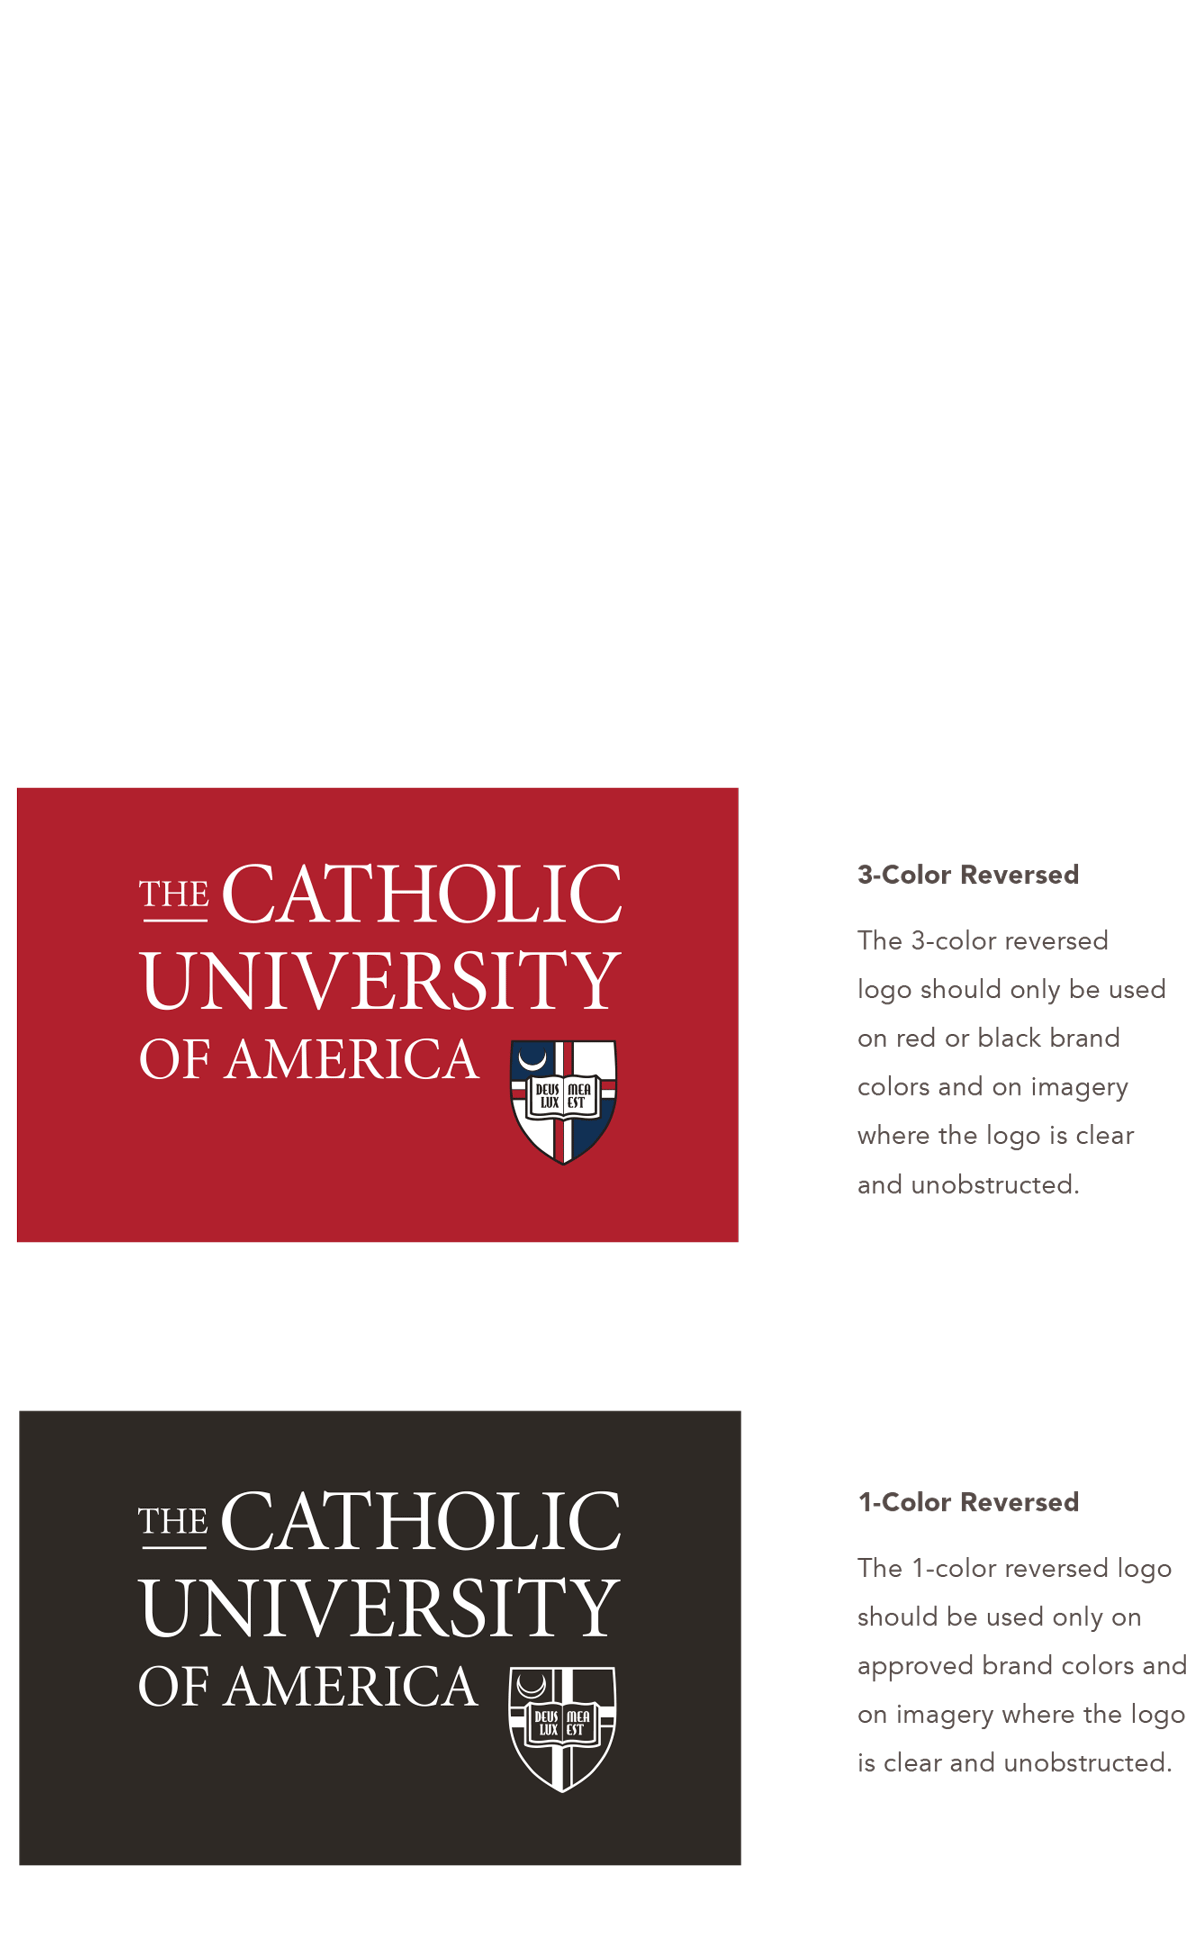 University Identity - logo color reversed